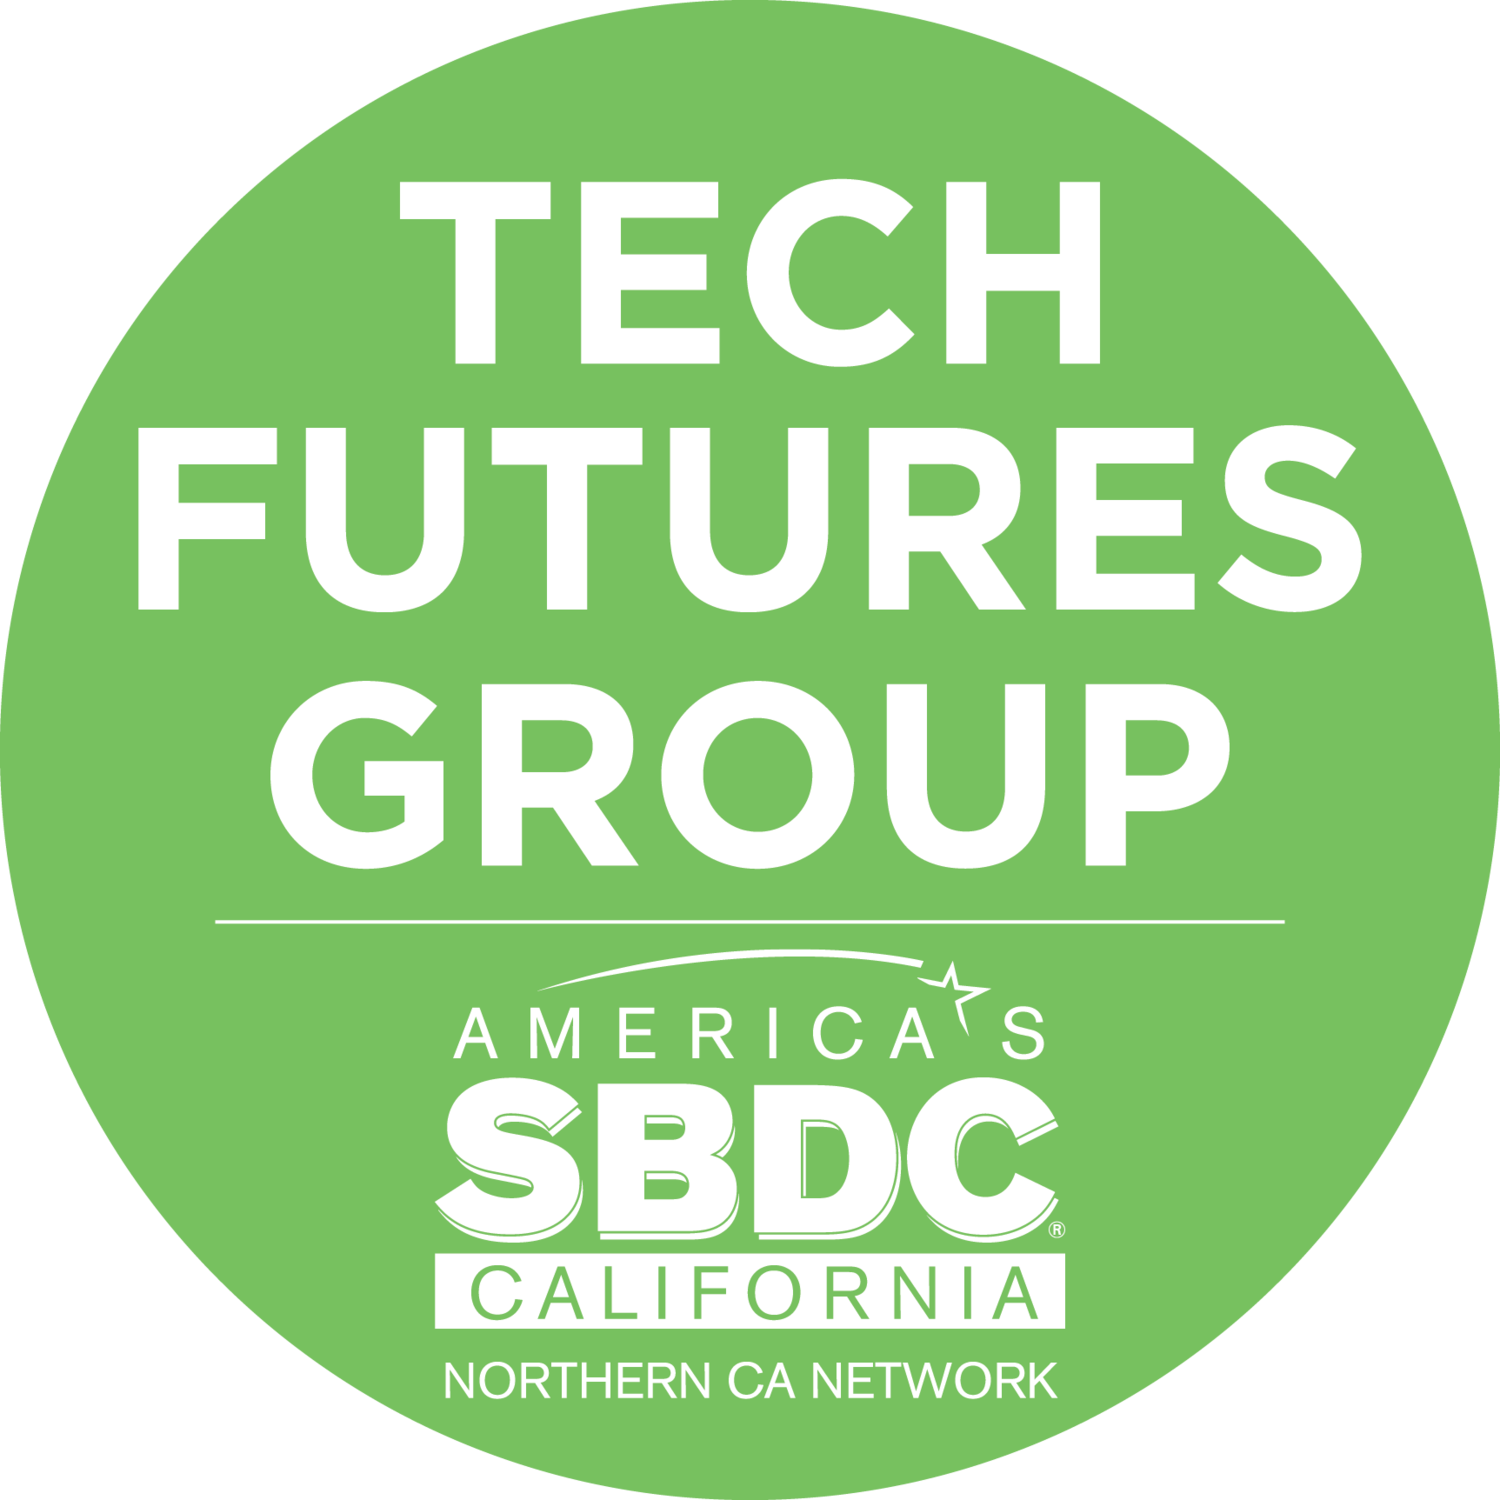 Tech futures group the. Technology clipart green technology